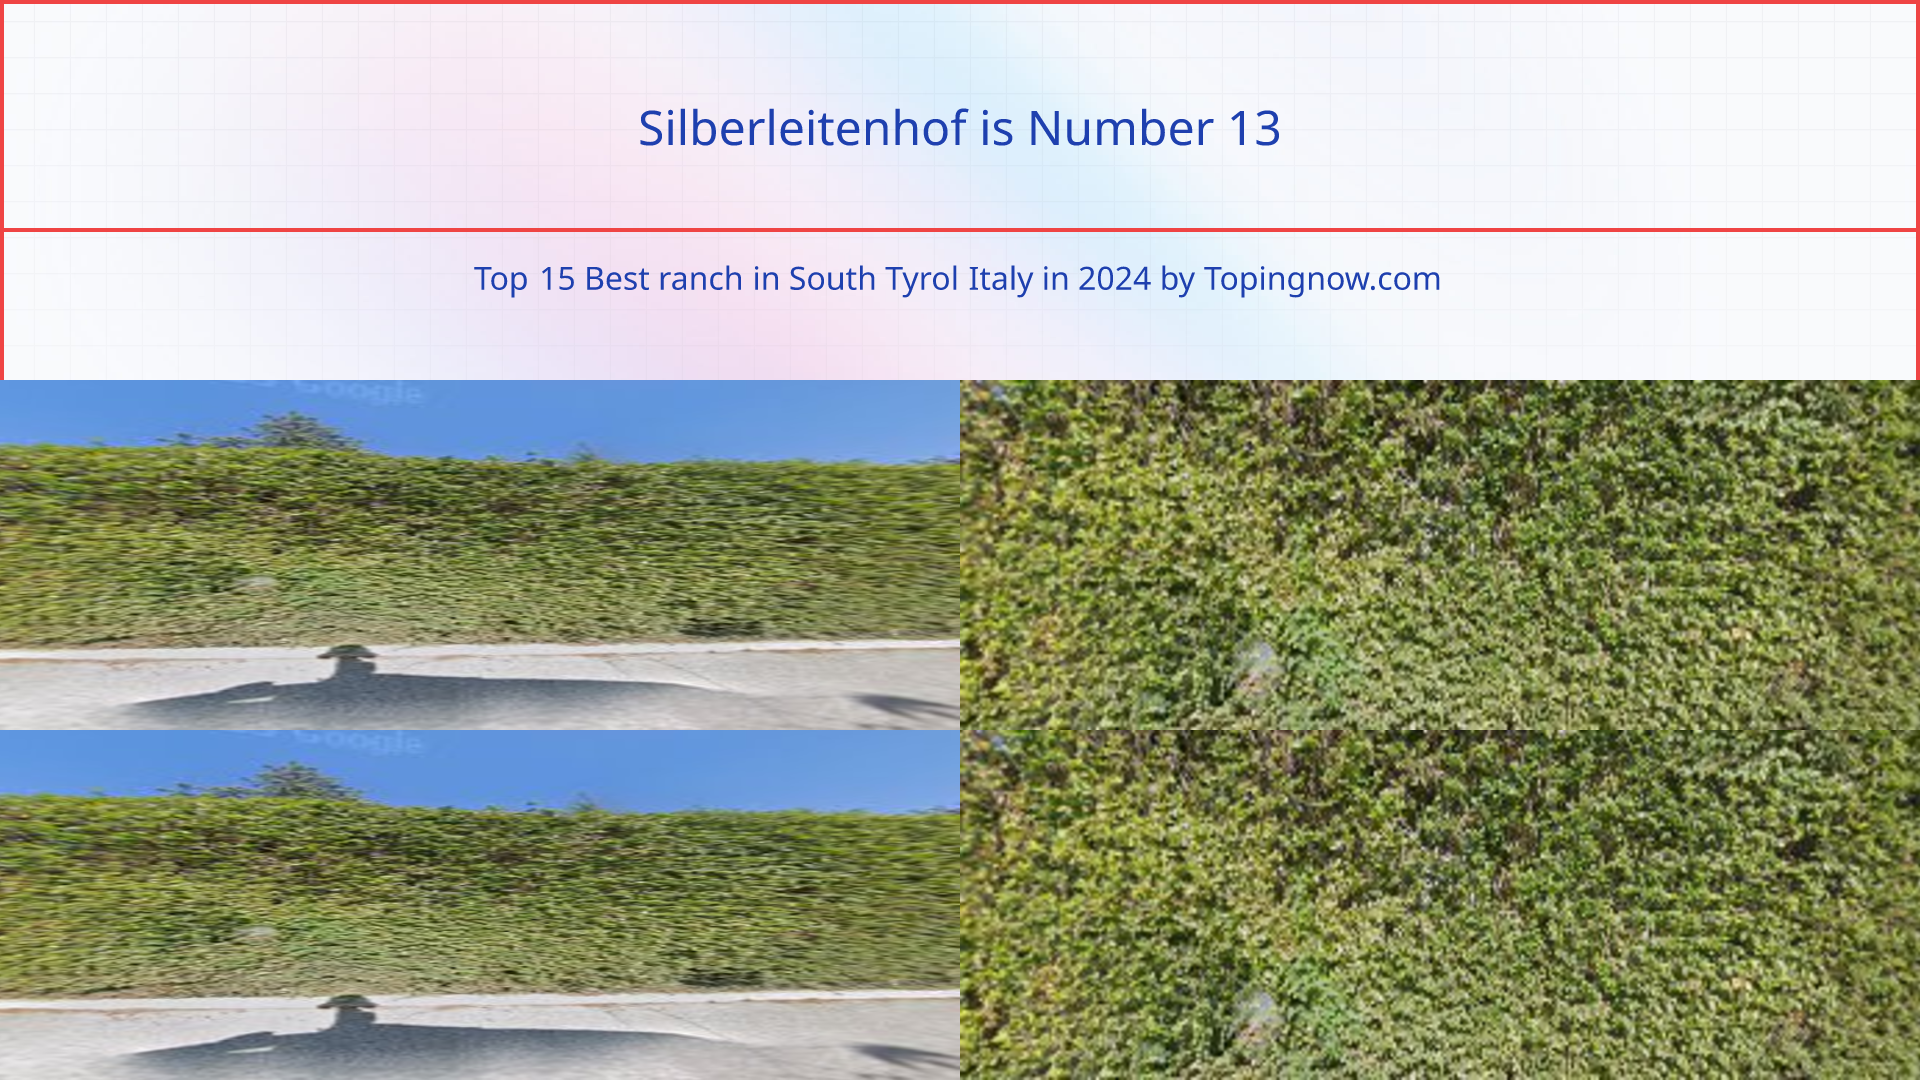 Silberleitenhof: Top 15 Best ranch in South Tyrol Italy in 2024